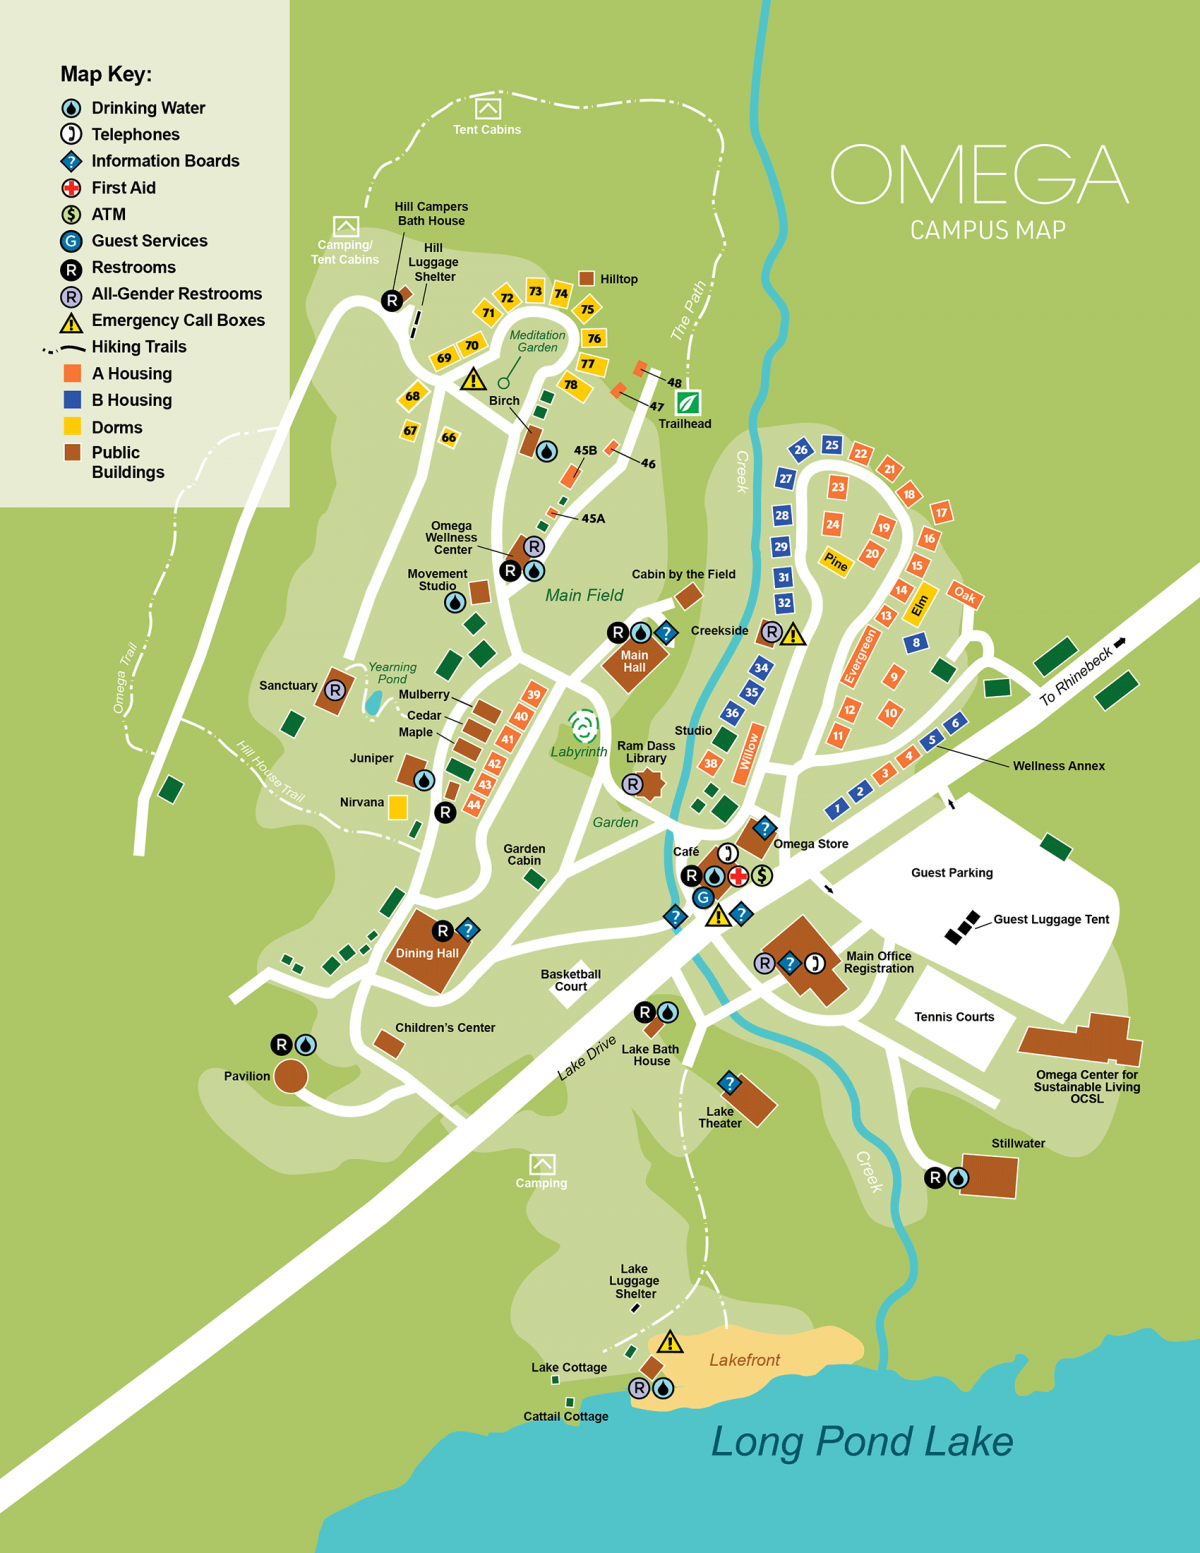 Omega campus map